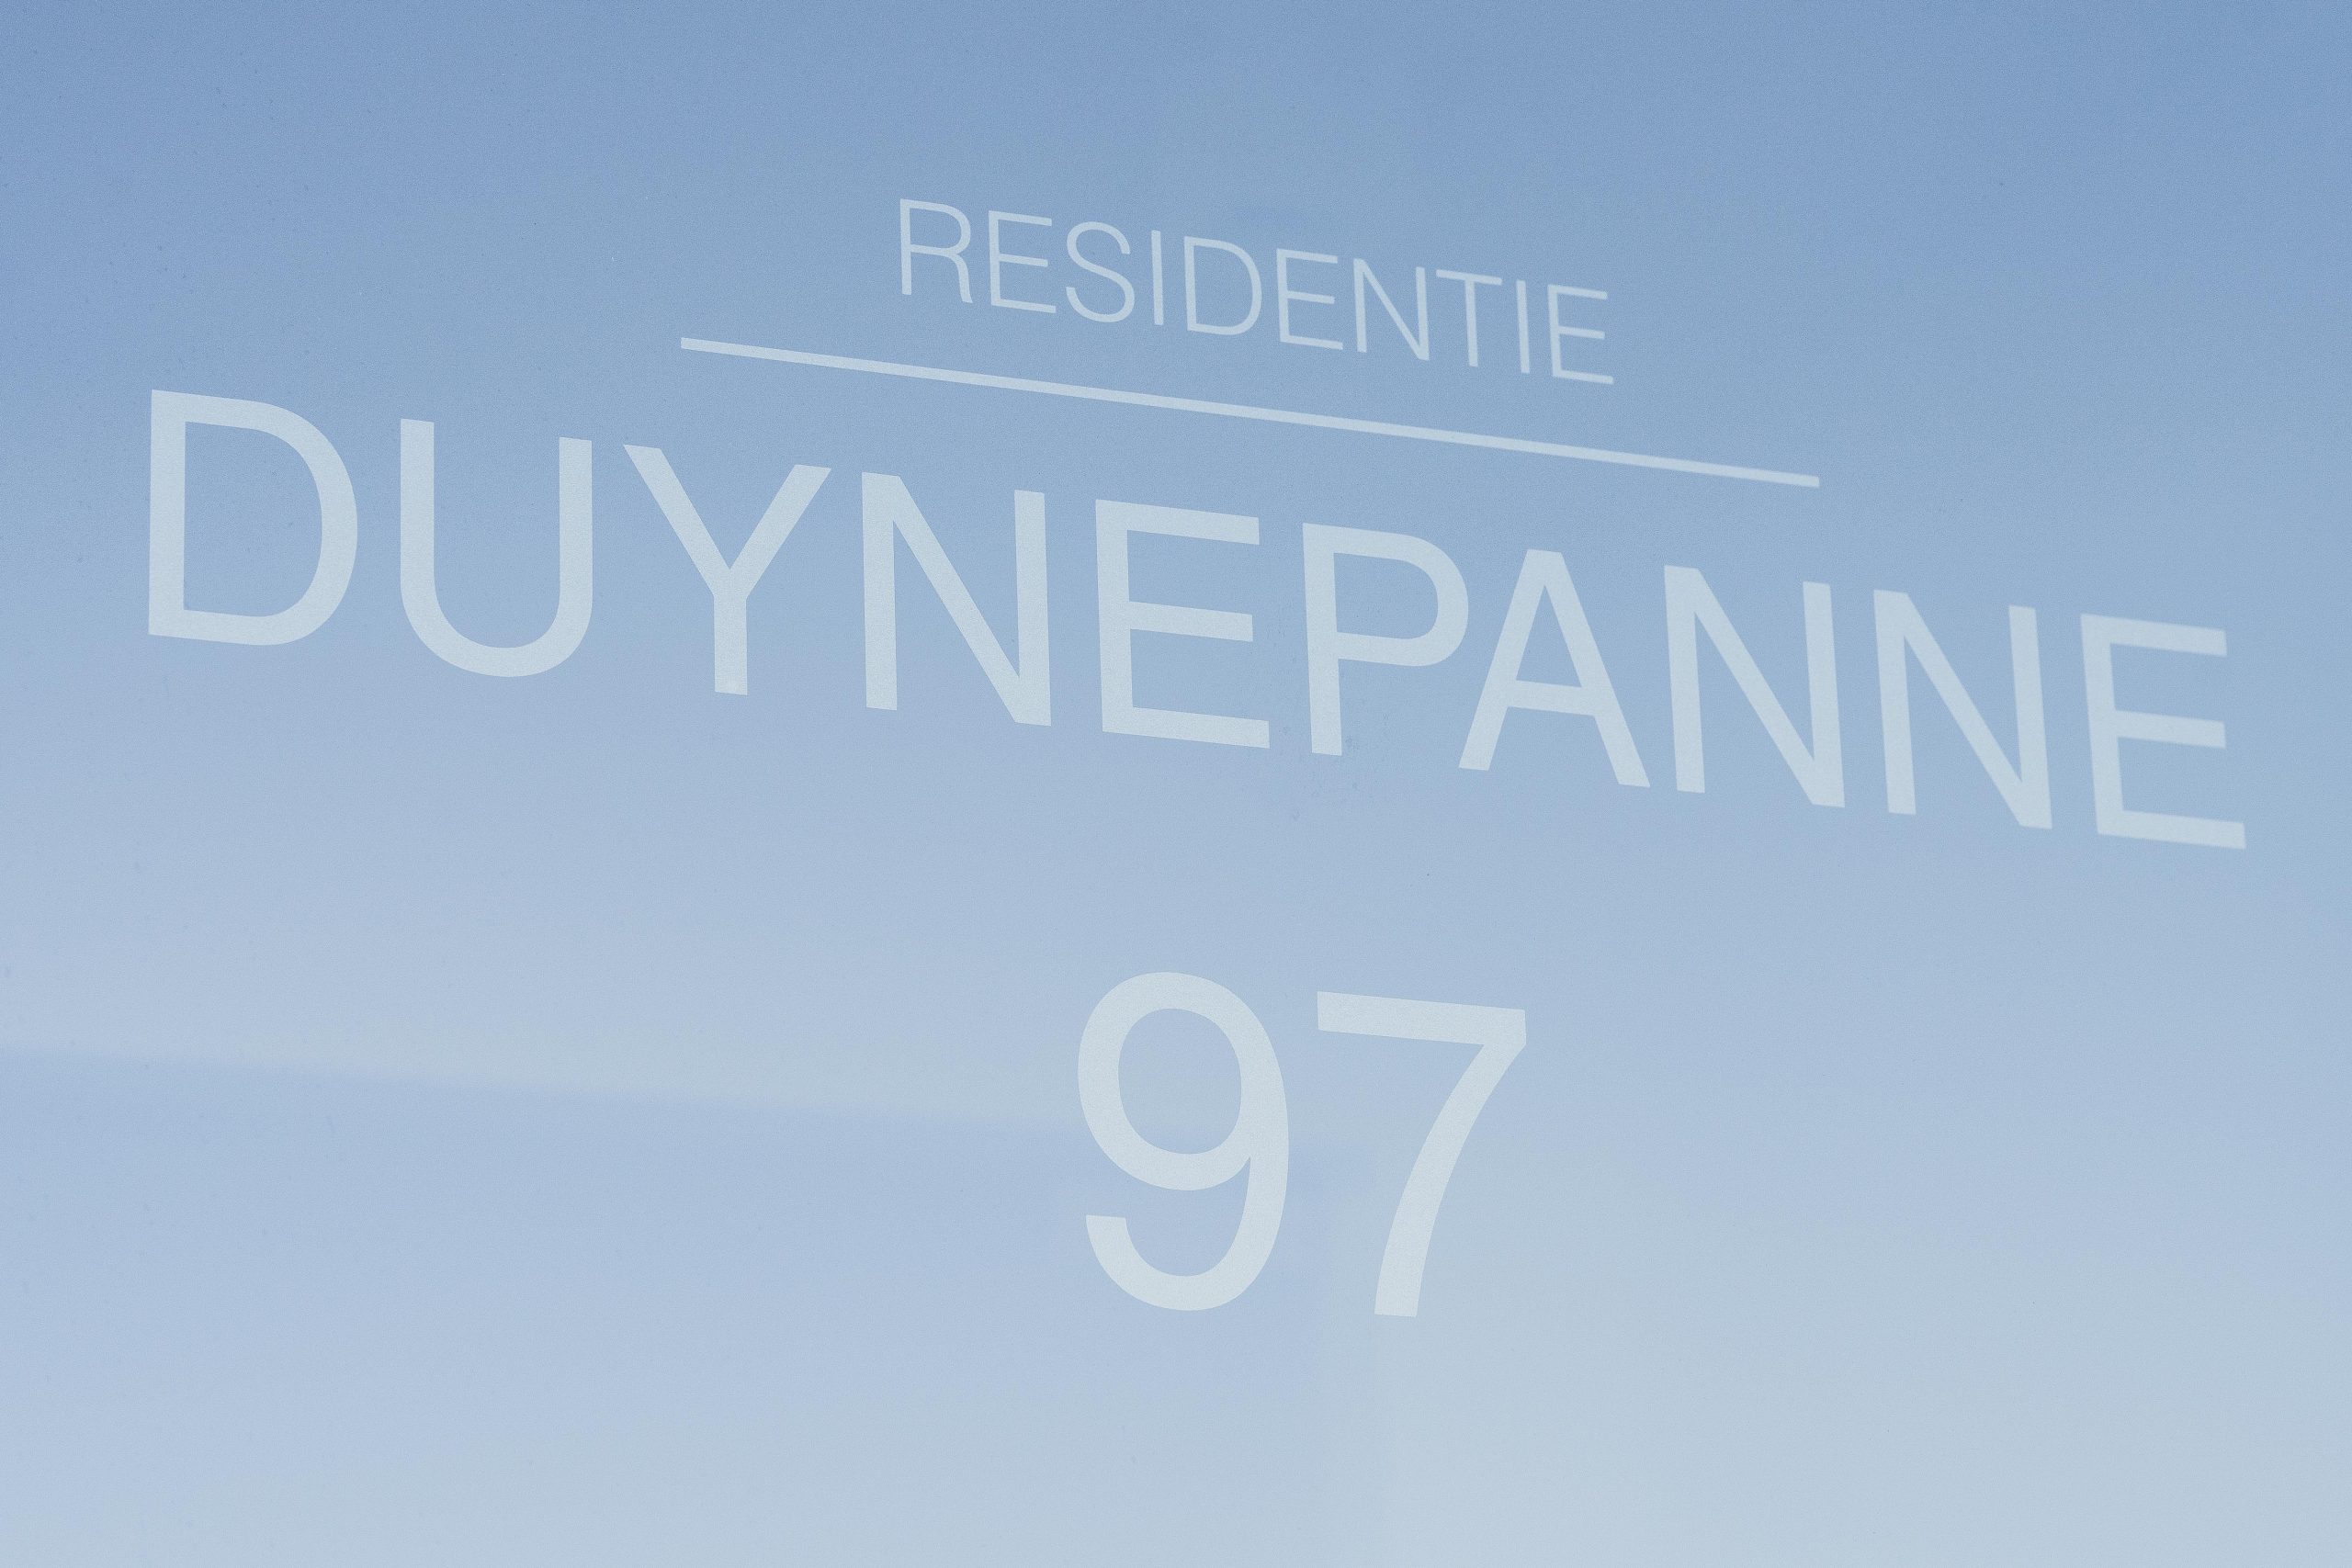 Duynepanne-15